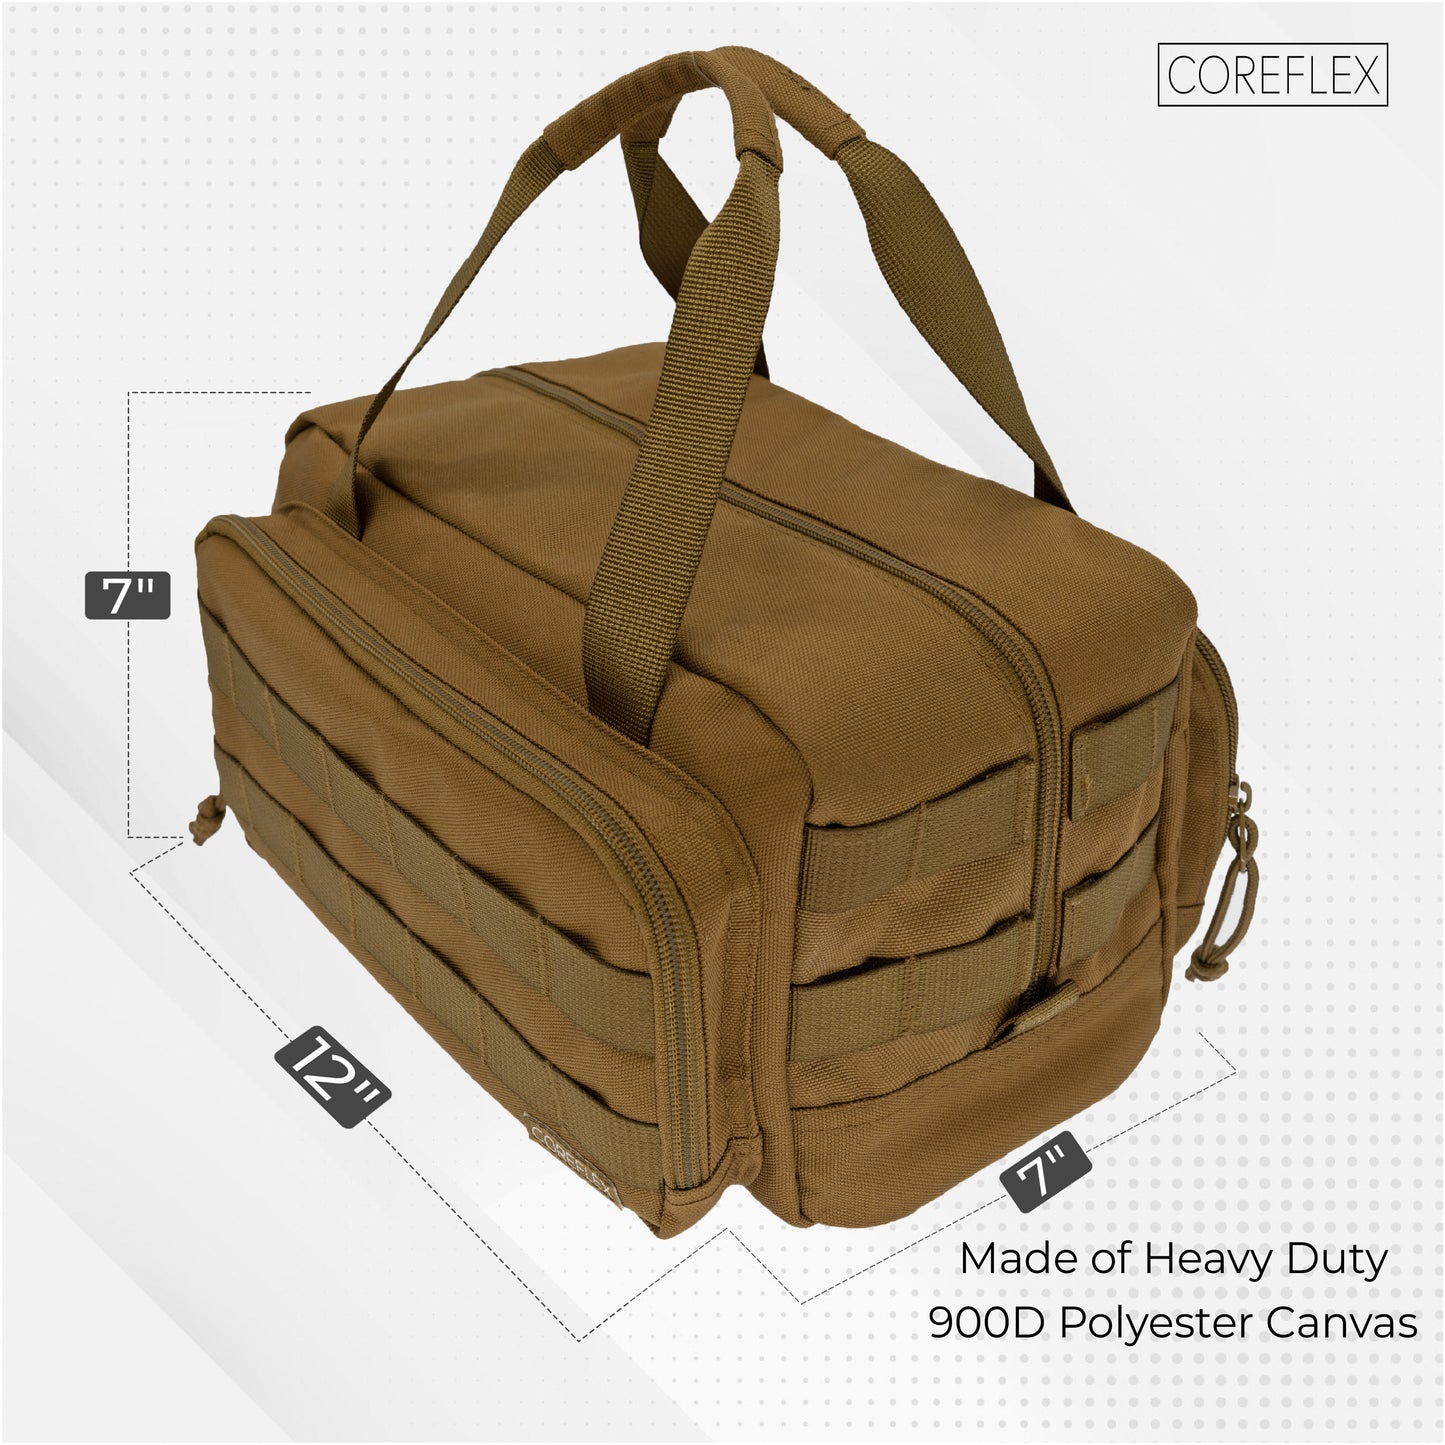 Coreflex 12-inch Heavy Duty Tool Bag, Tactical Bag, Gear Bag, Range Bag, EDC Bag